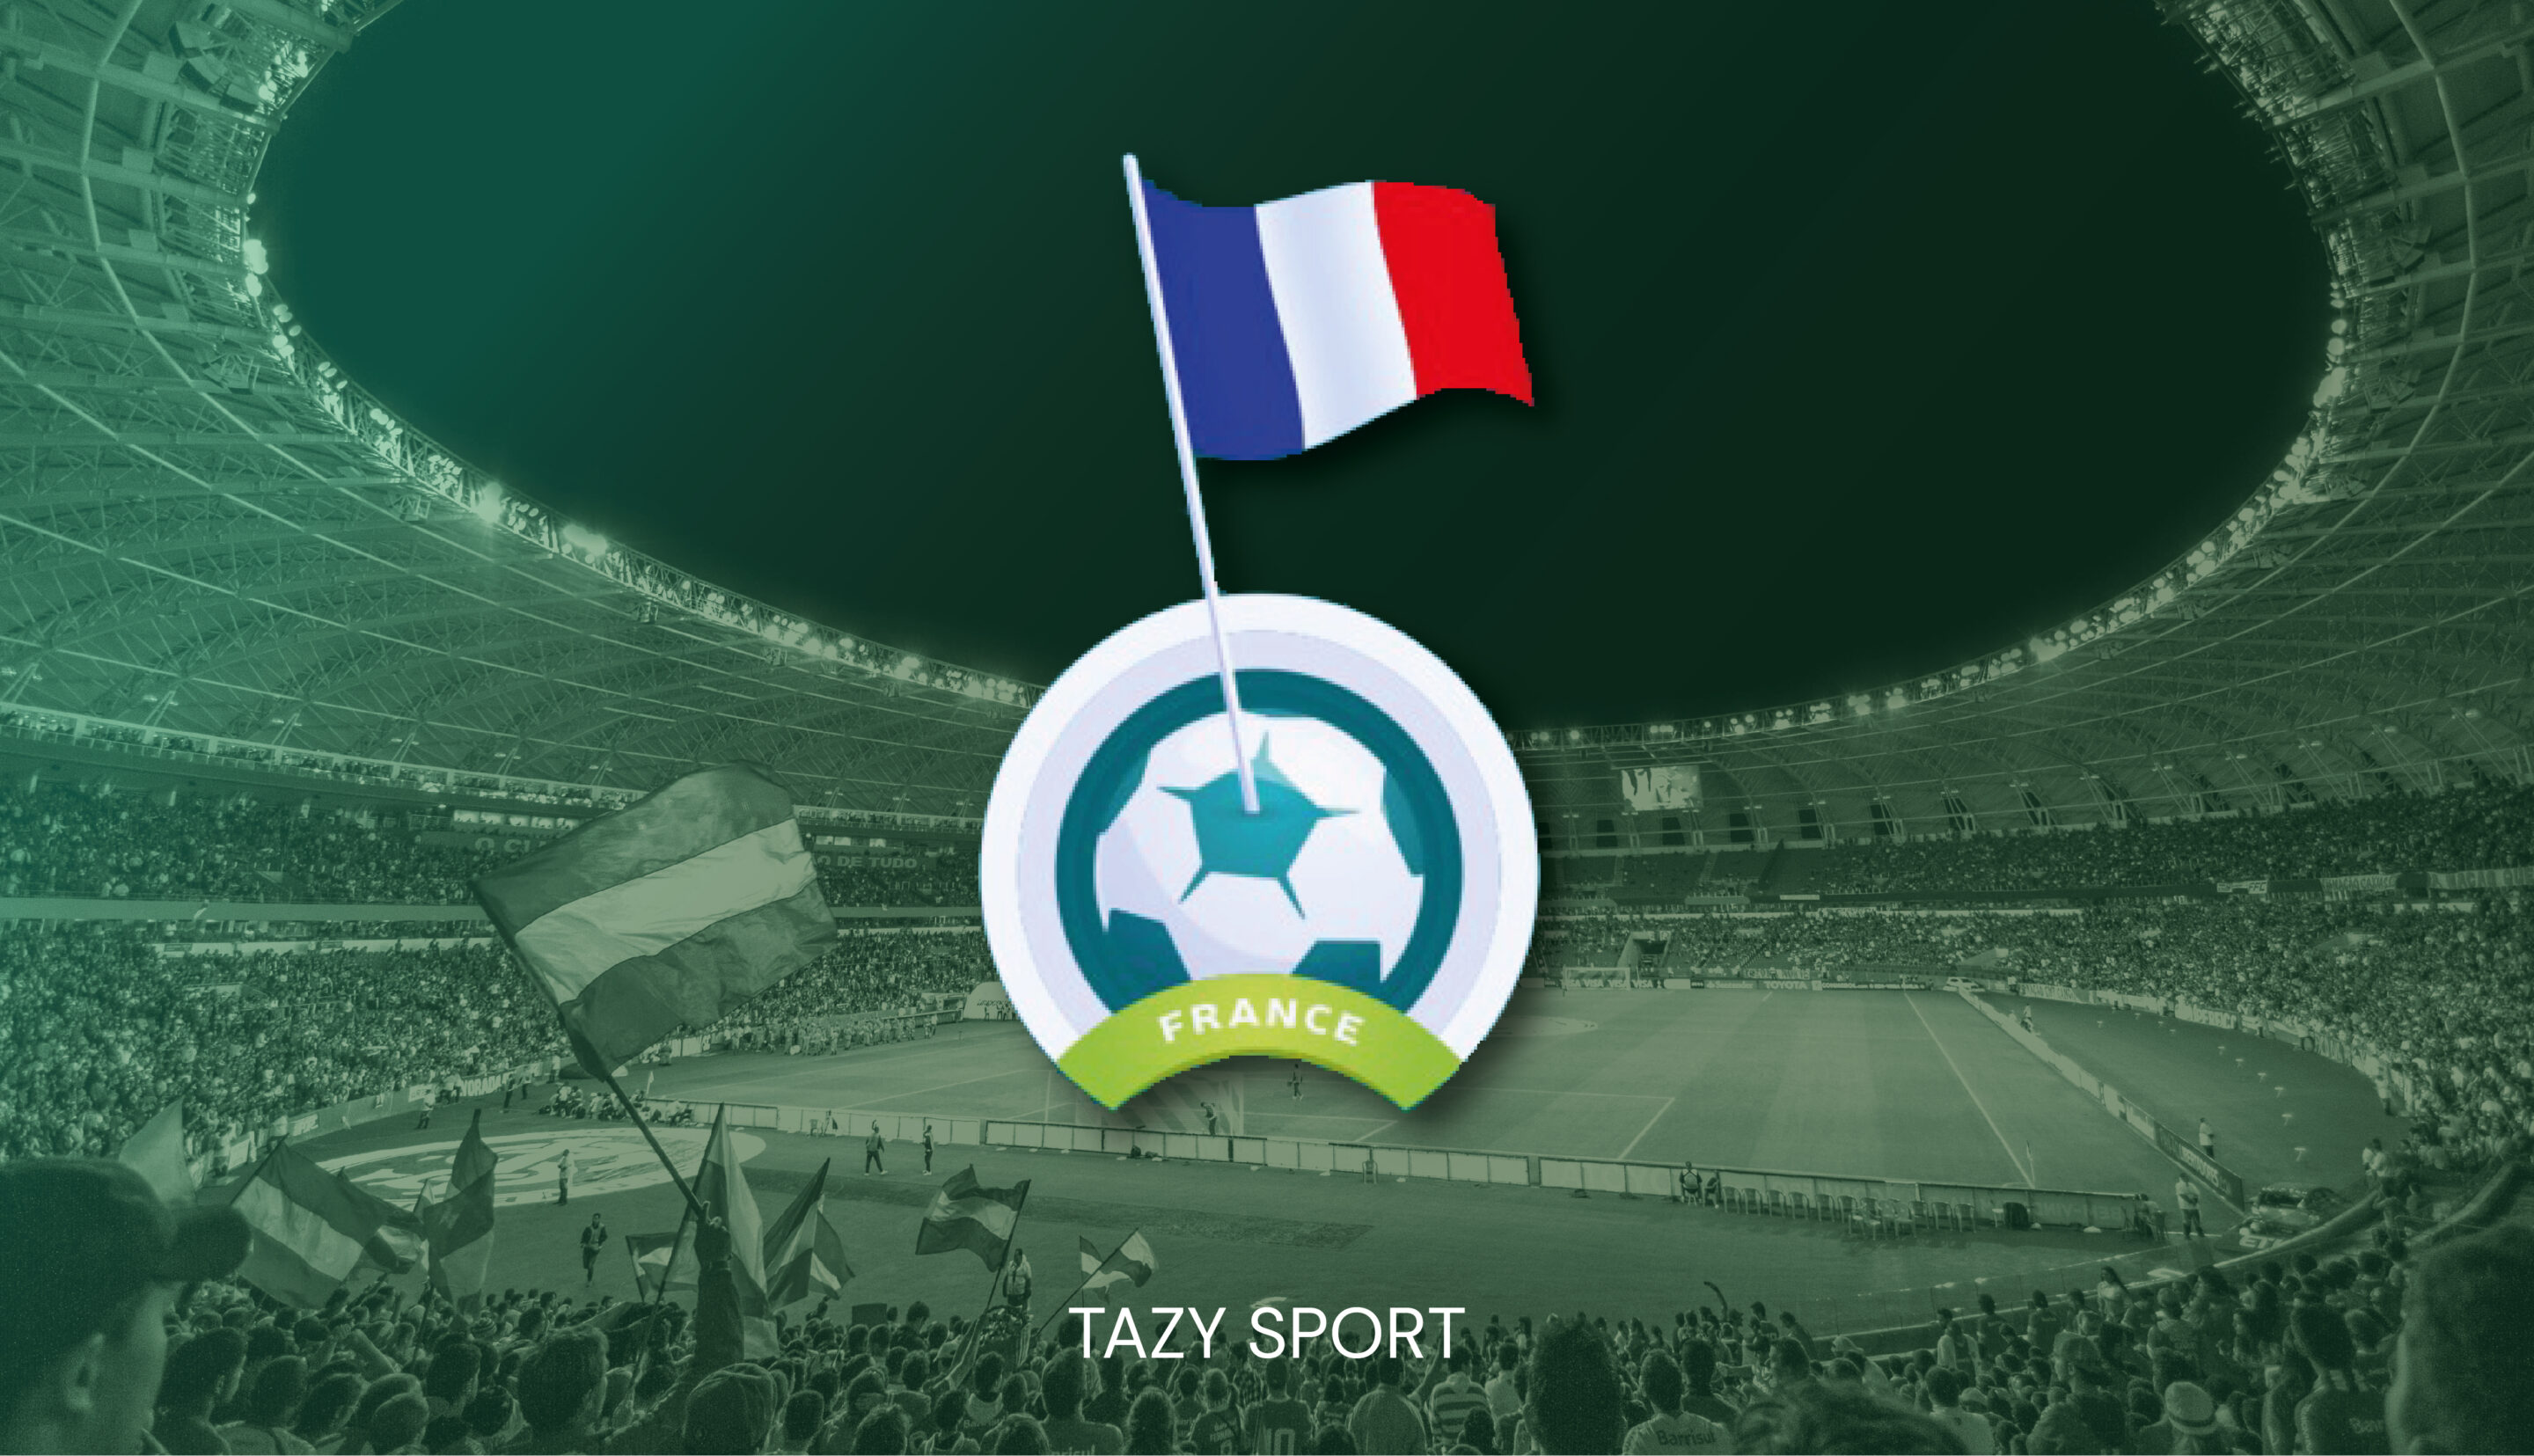 Pronostic football en cours France - Tazy Sport